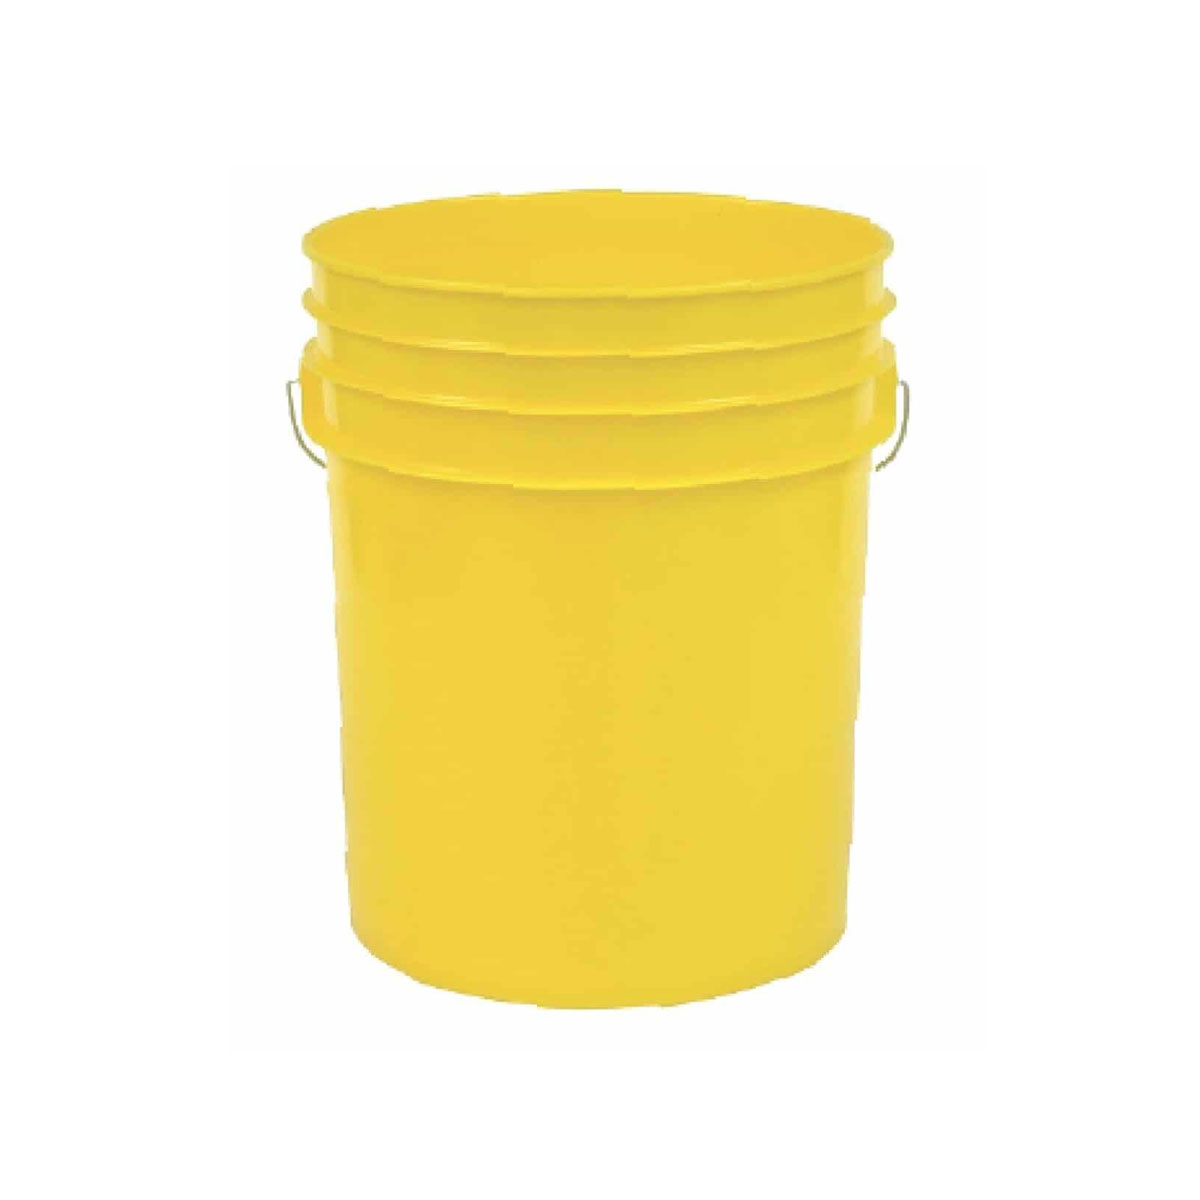 https://www.formgraphicsinc.com/wp-content/uploads/5-gal-plastic-bucket-yellow.jpg